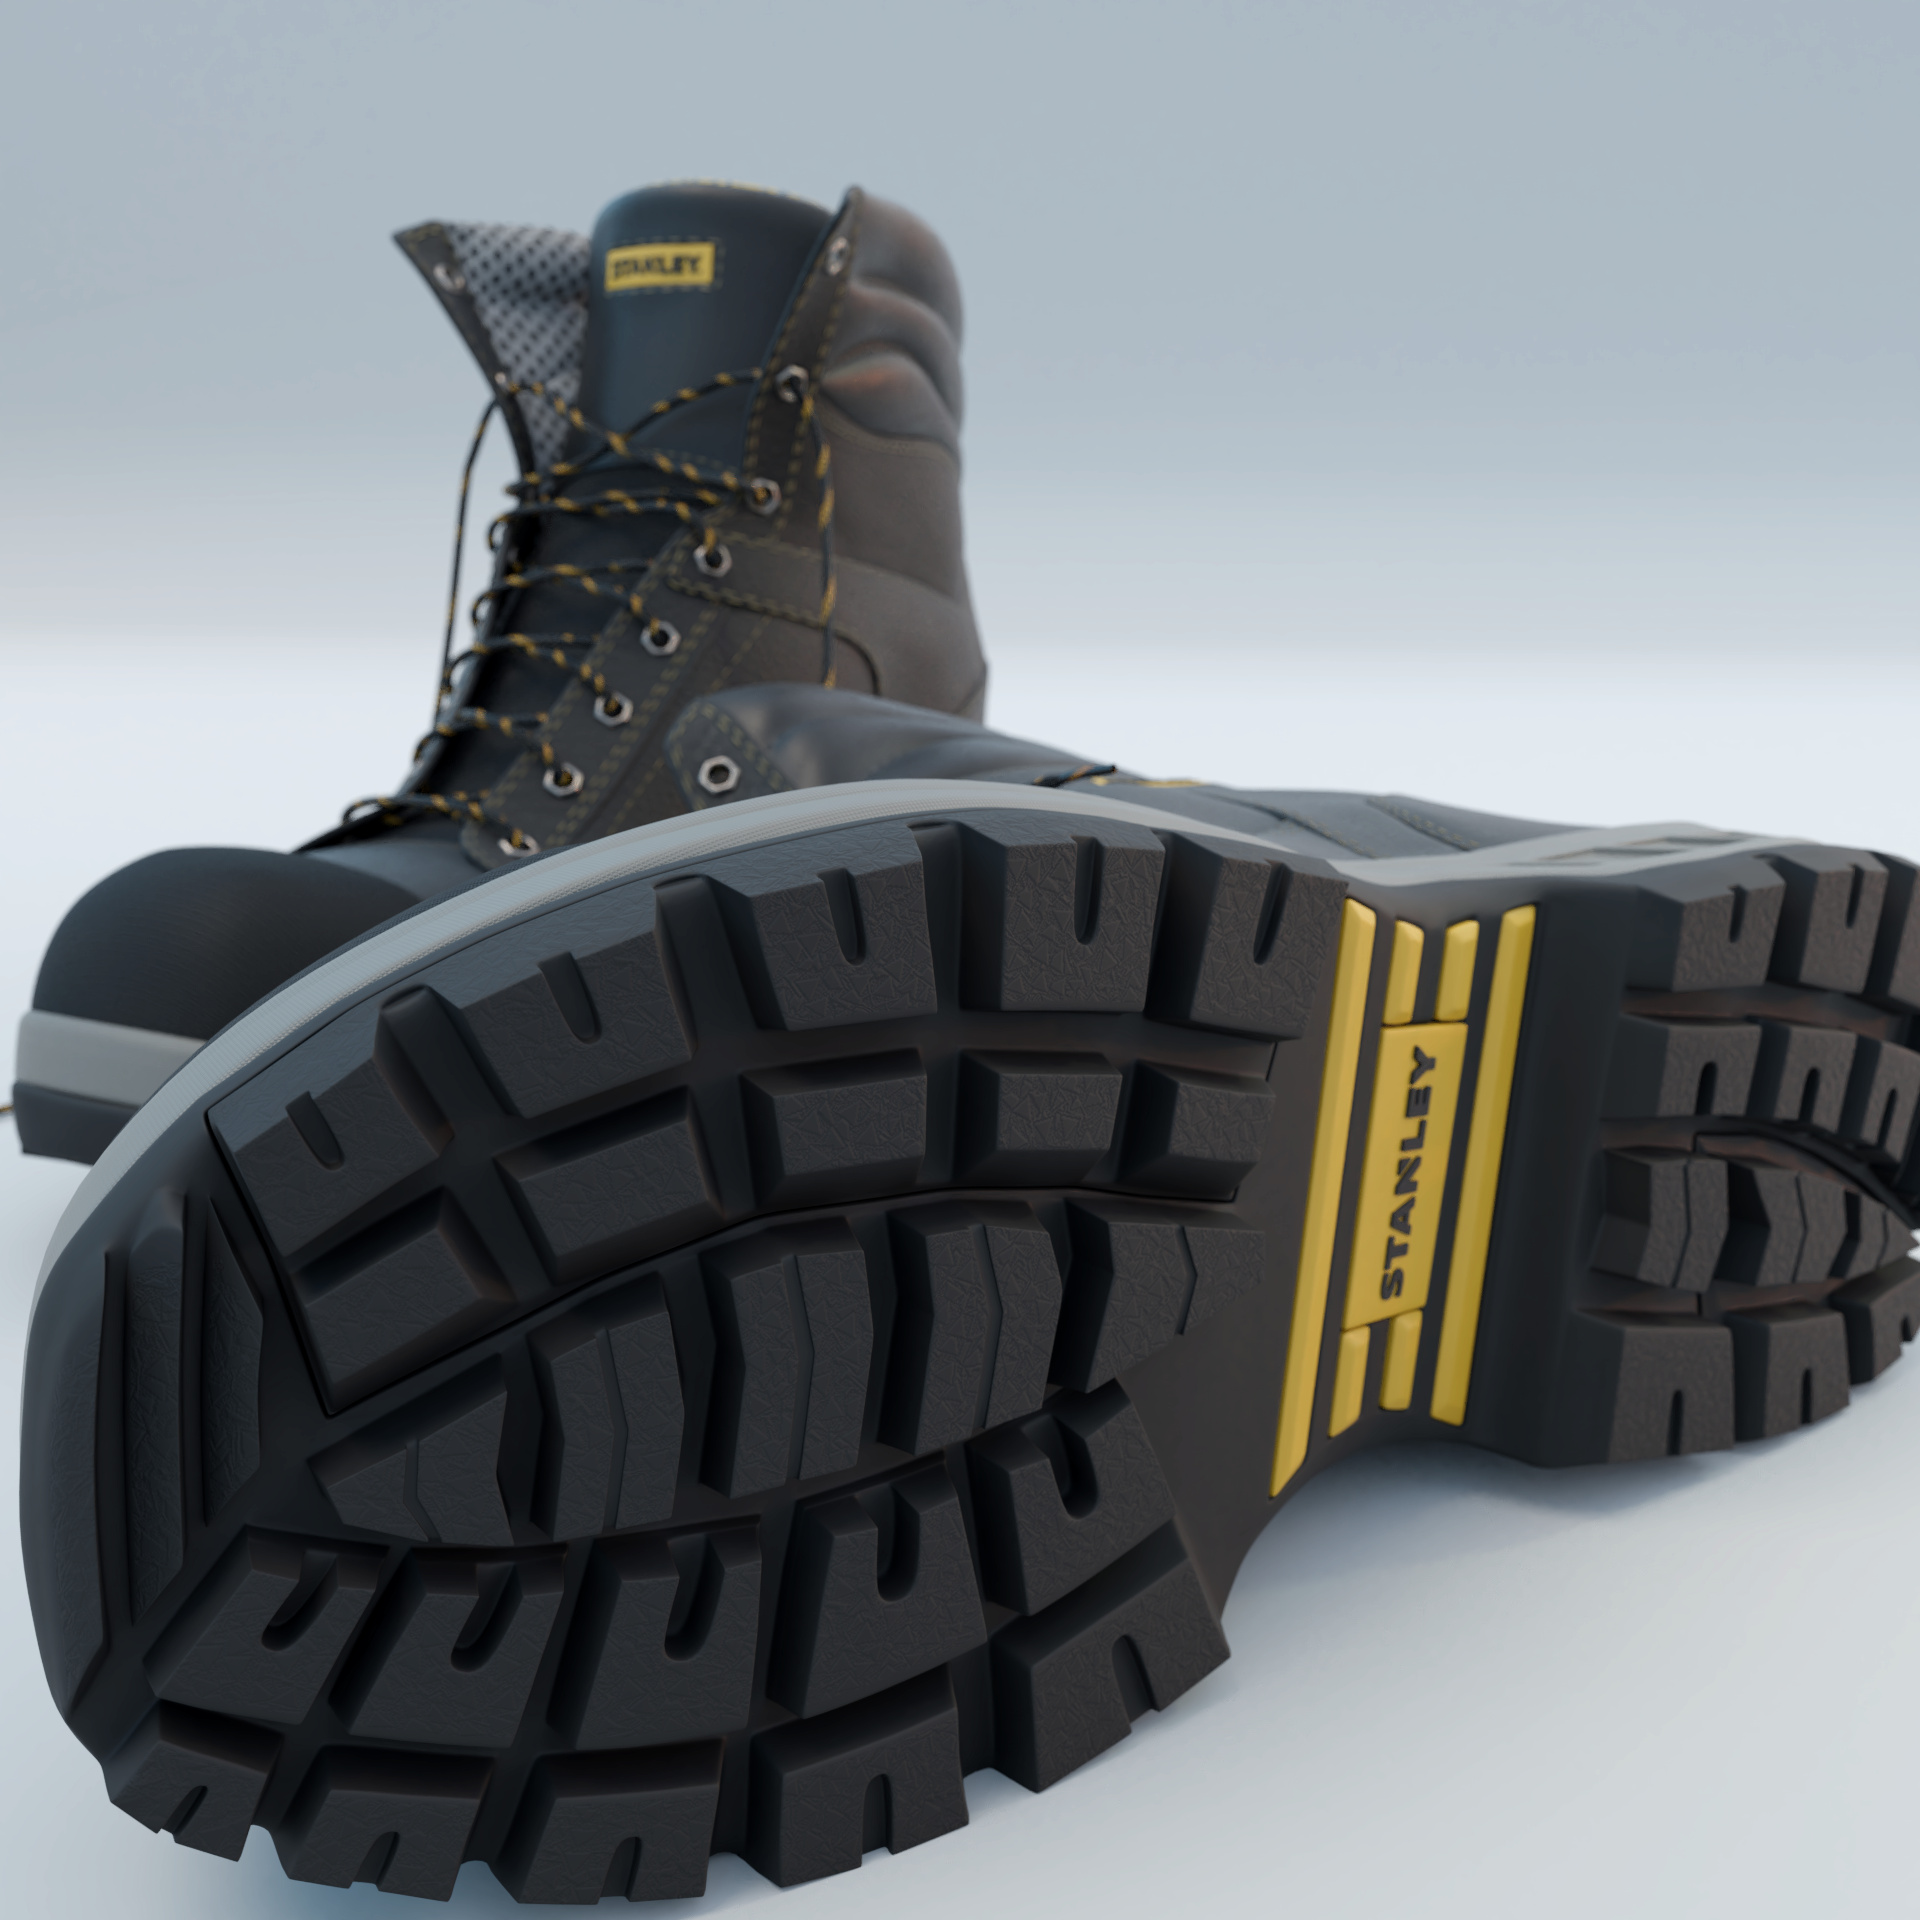 Men's Stanley Steel Toe Work Boots SIZE 13 EXCELLENT CONDITION